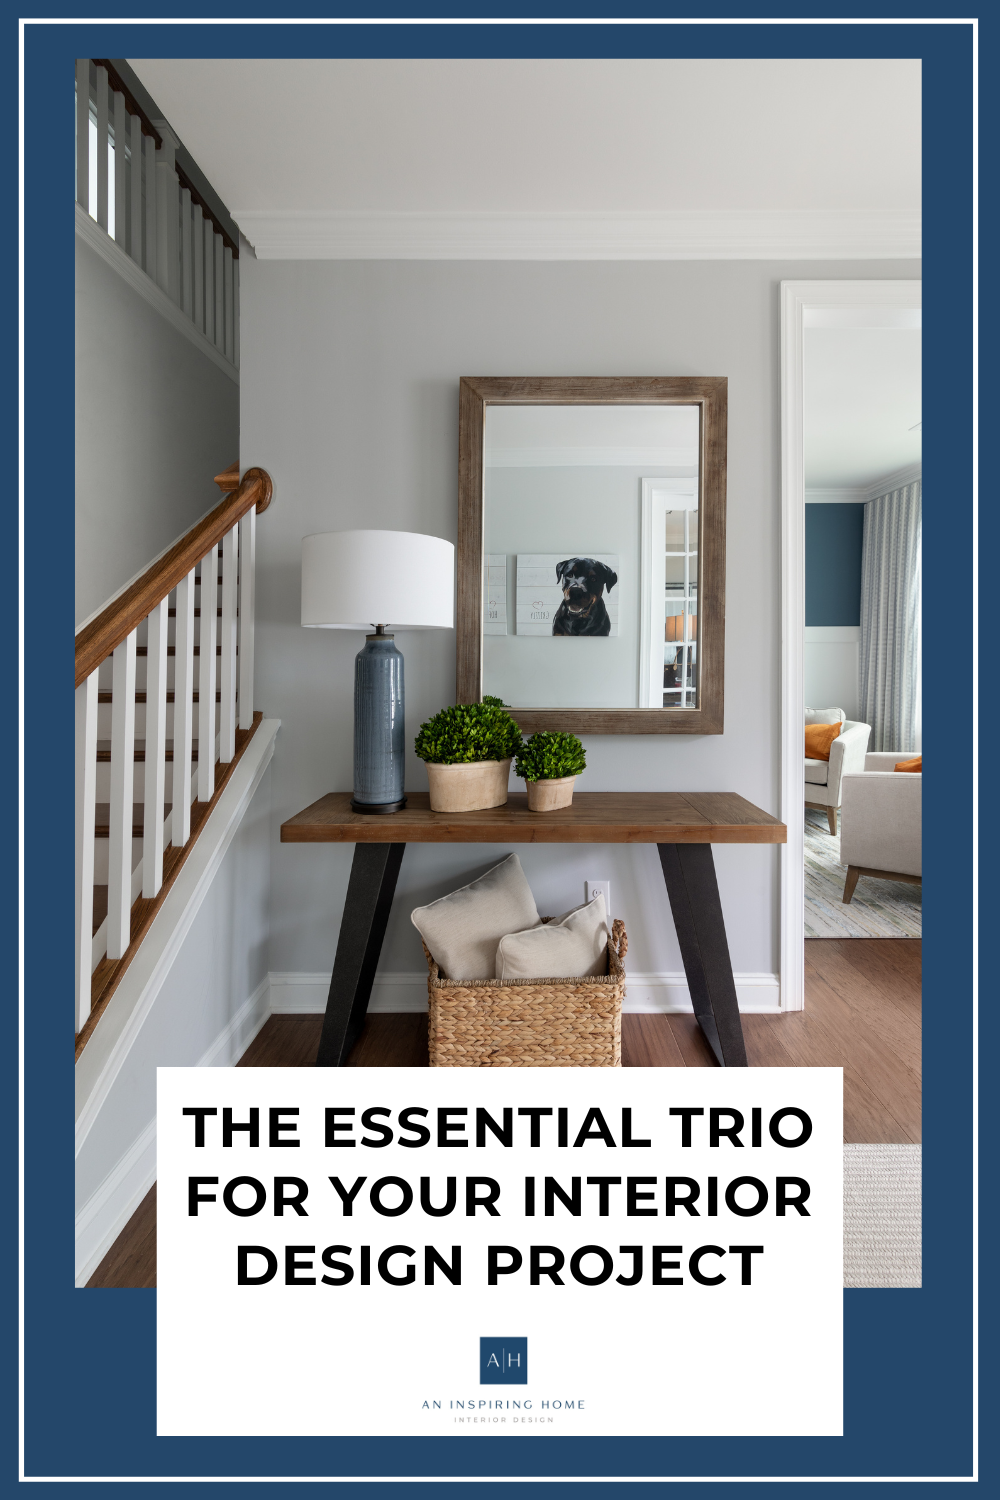 The Essential Trio for Your Interior Design Project